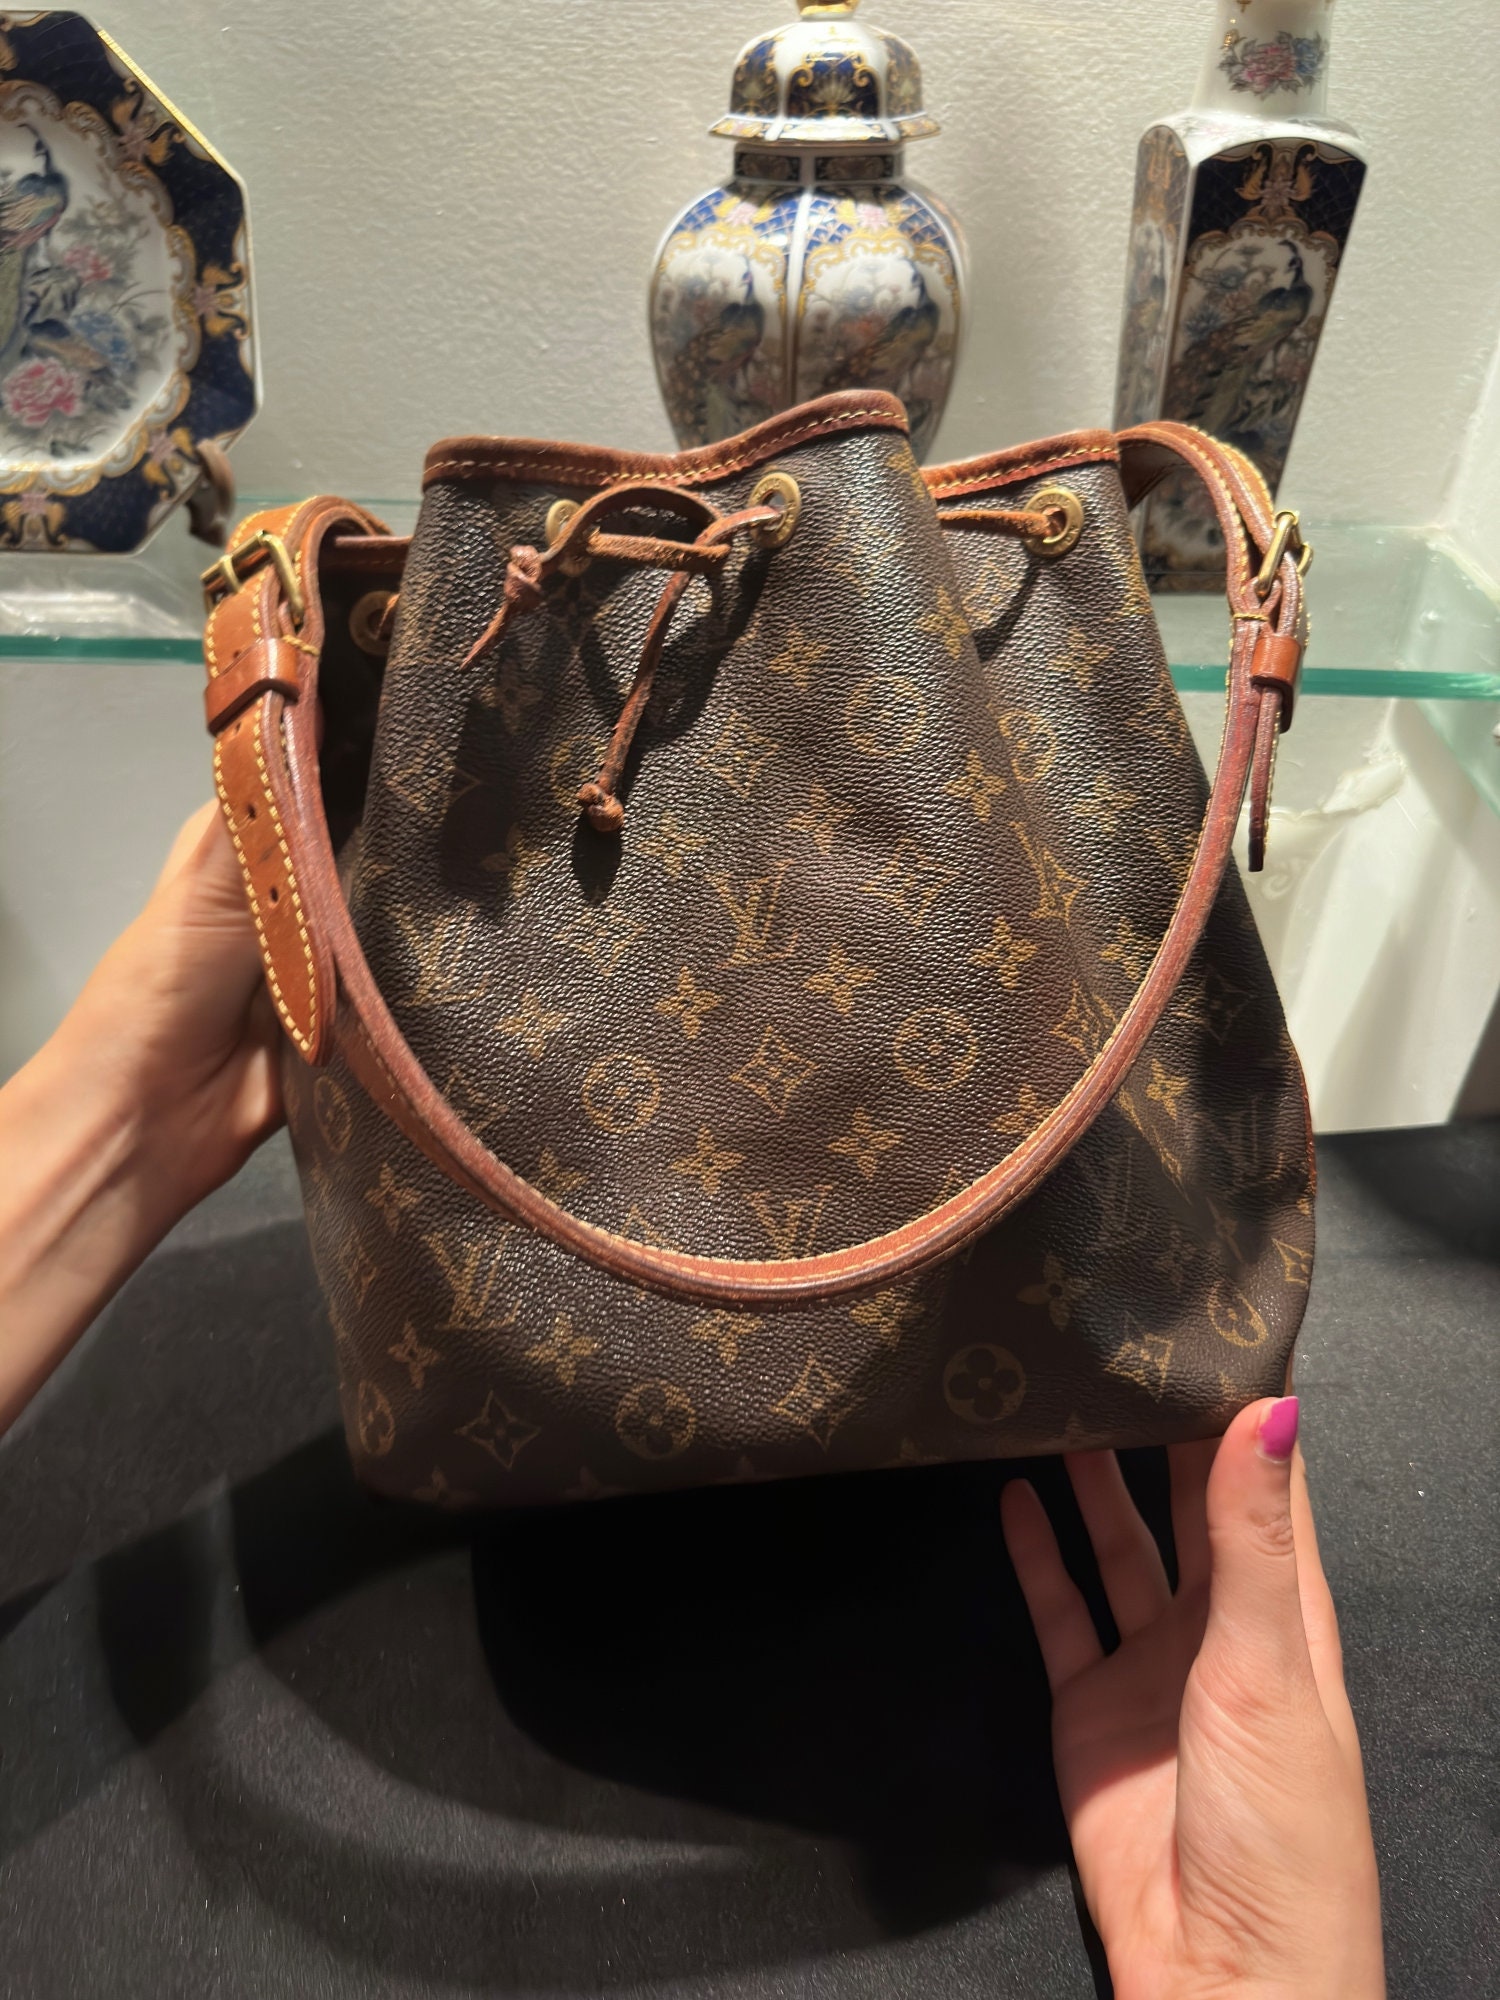 Authentic Louis Vuitton Bags -  Canada